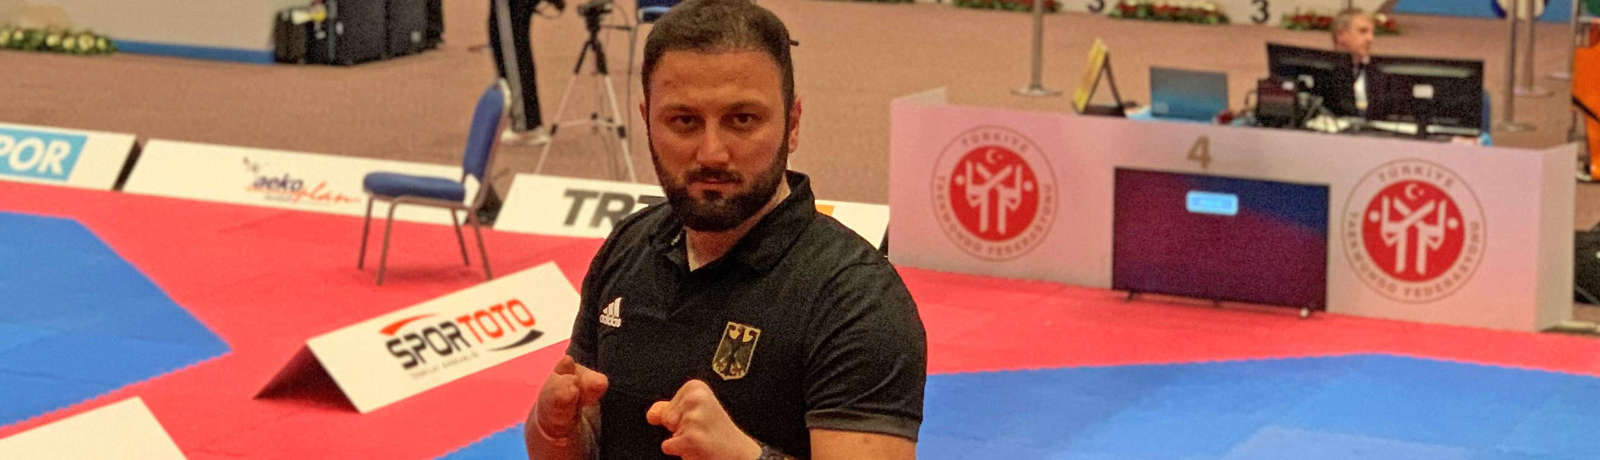 Hasim Celik in Kampf-Position